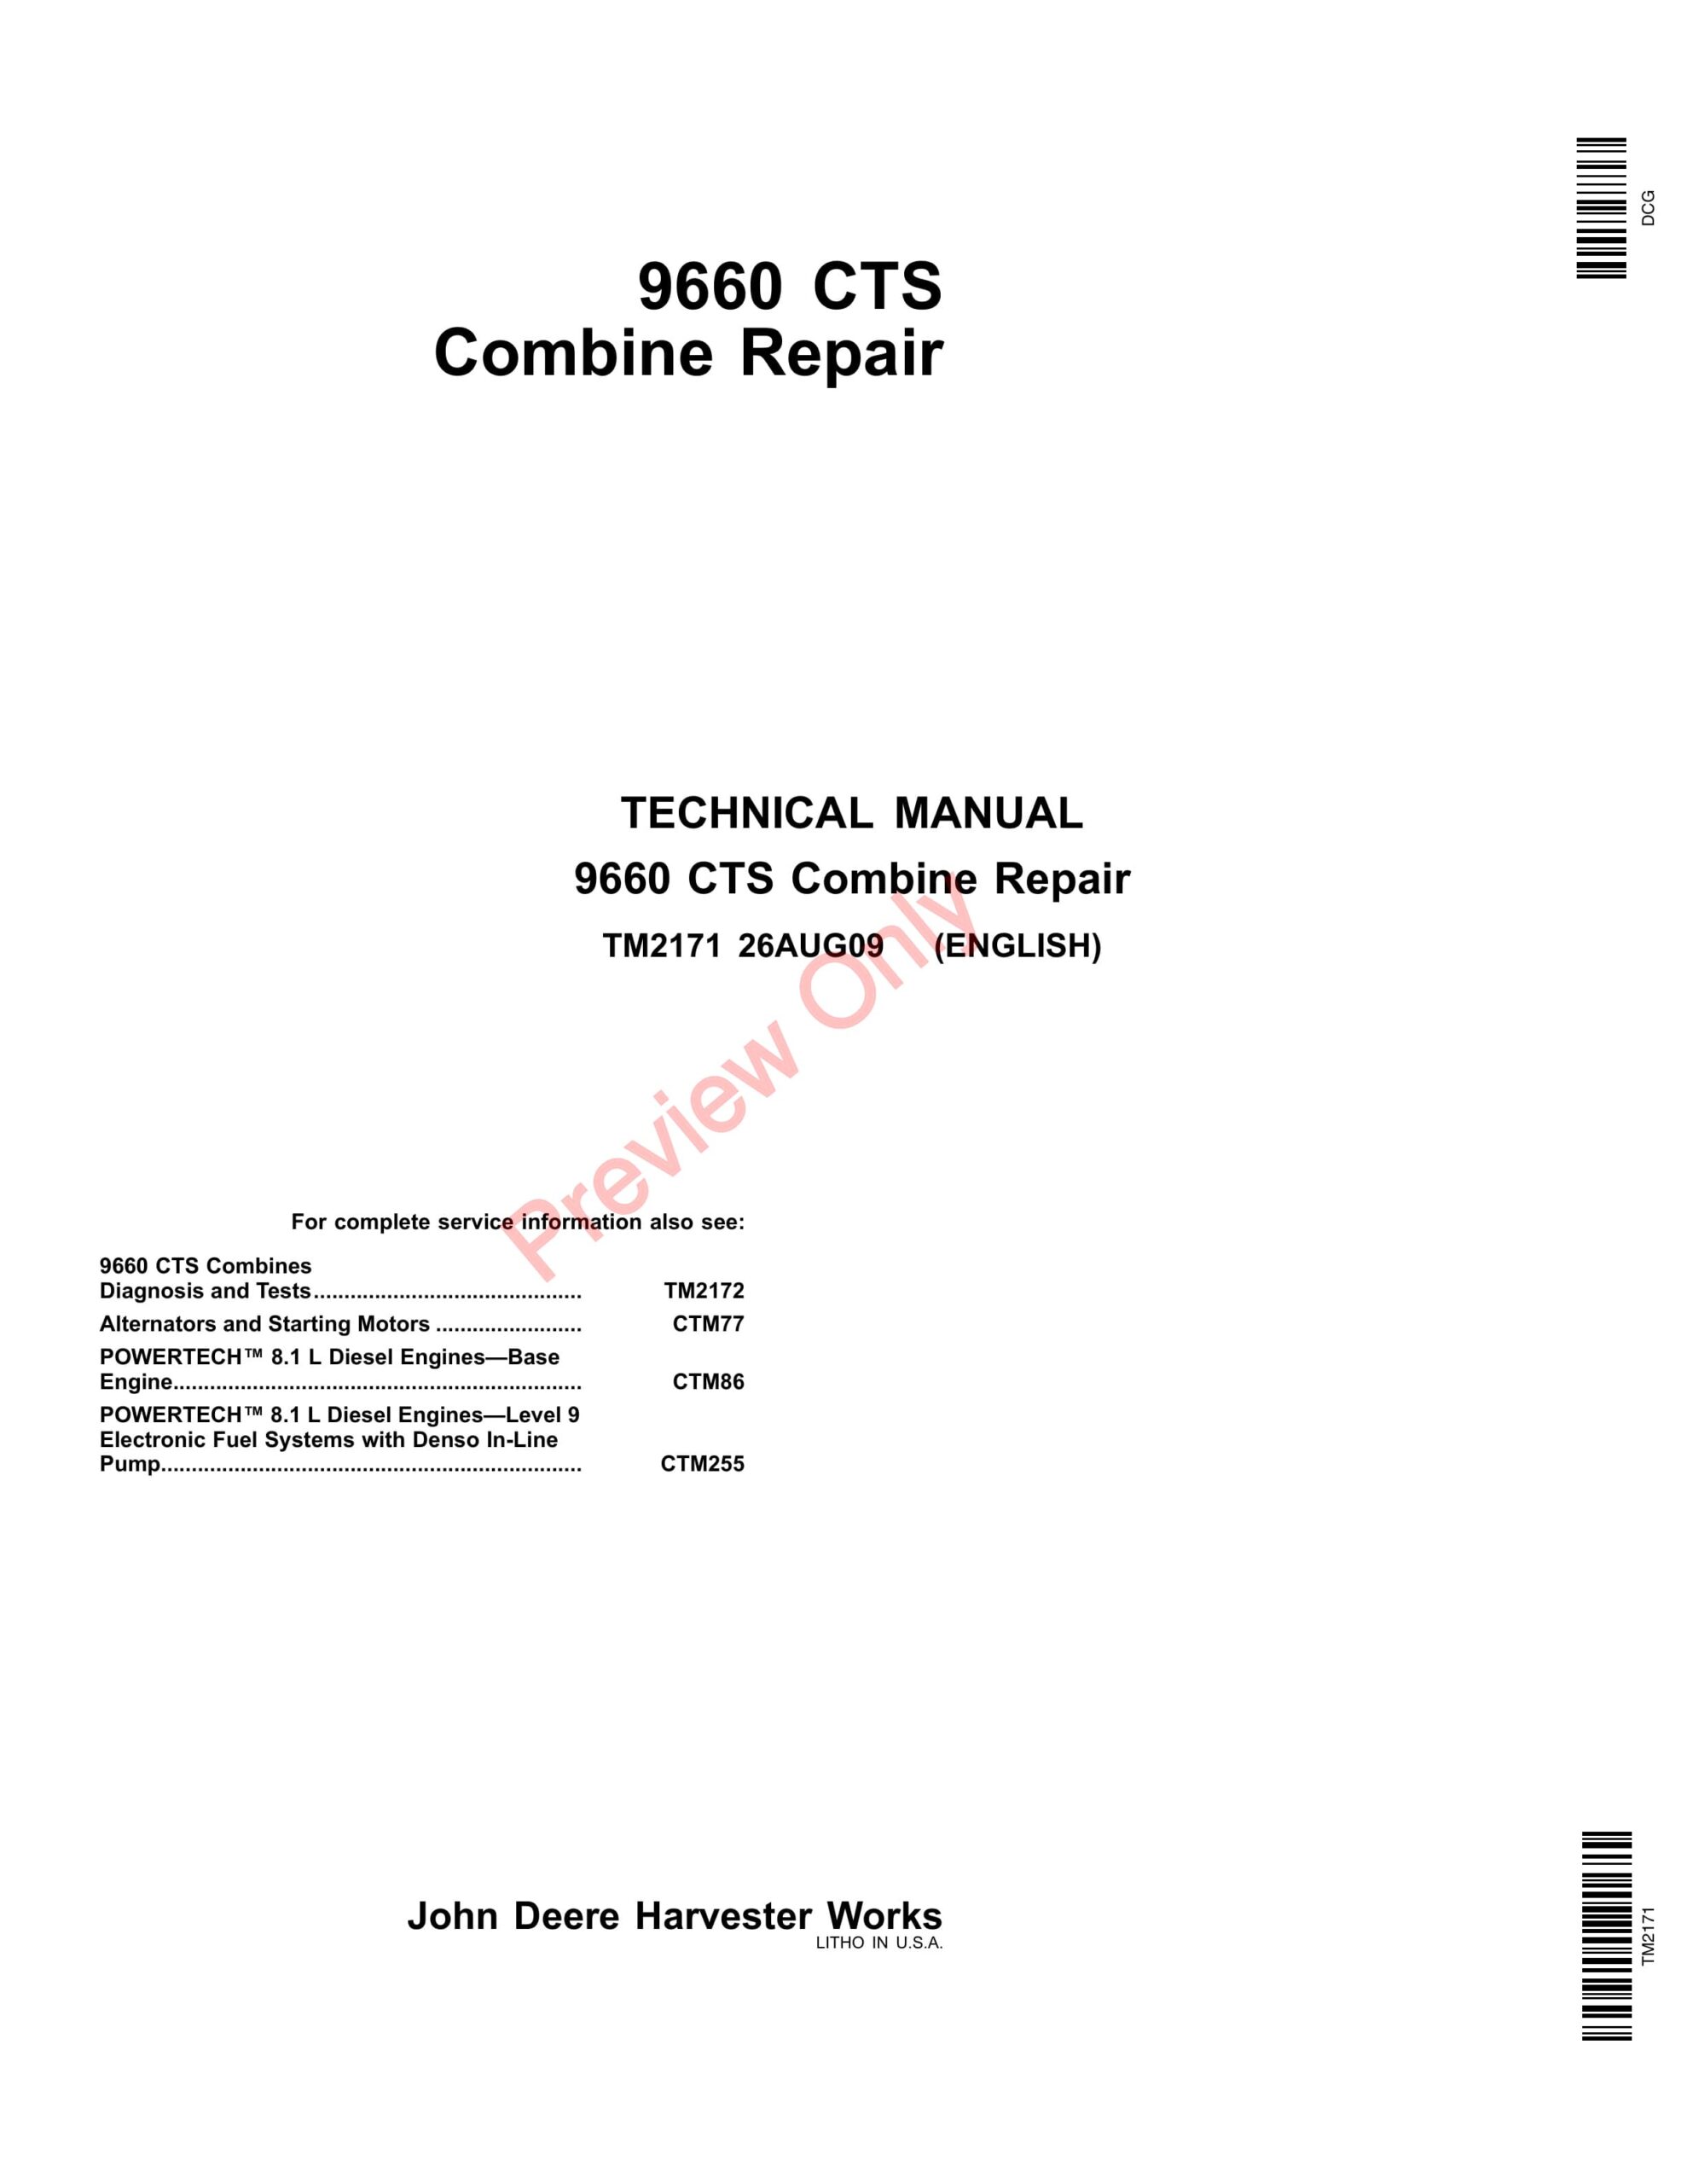 John Deere 9660 CTS Self-Propelled Combine (705401-) Technical Manual TM2171 26AUG09-1